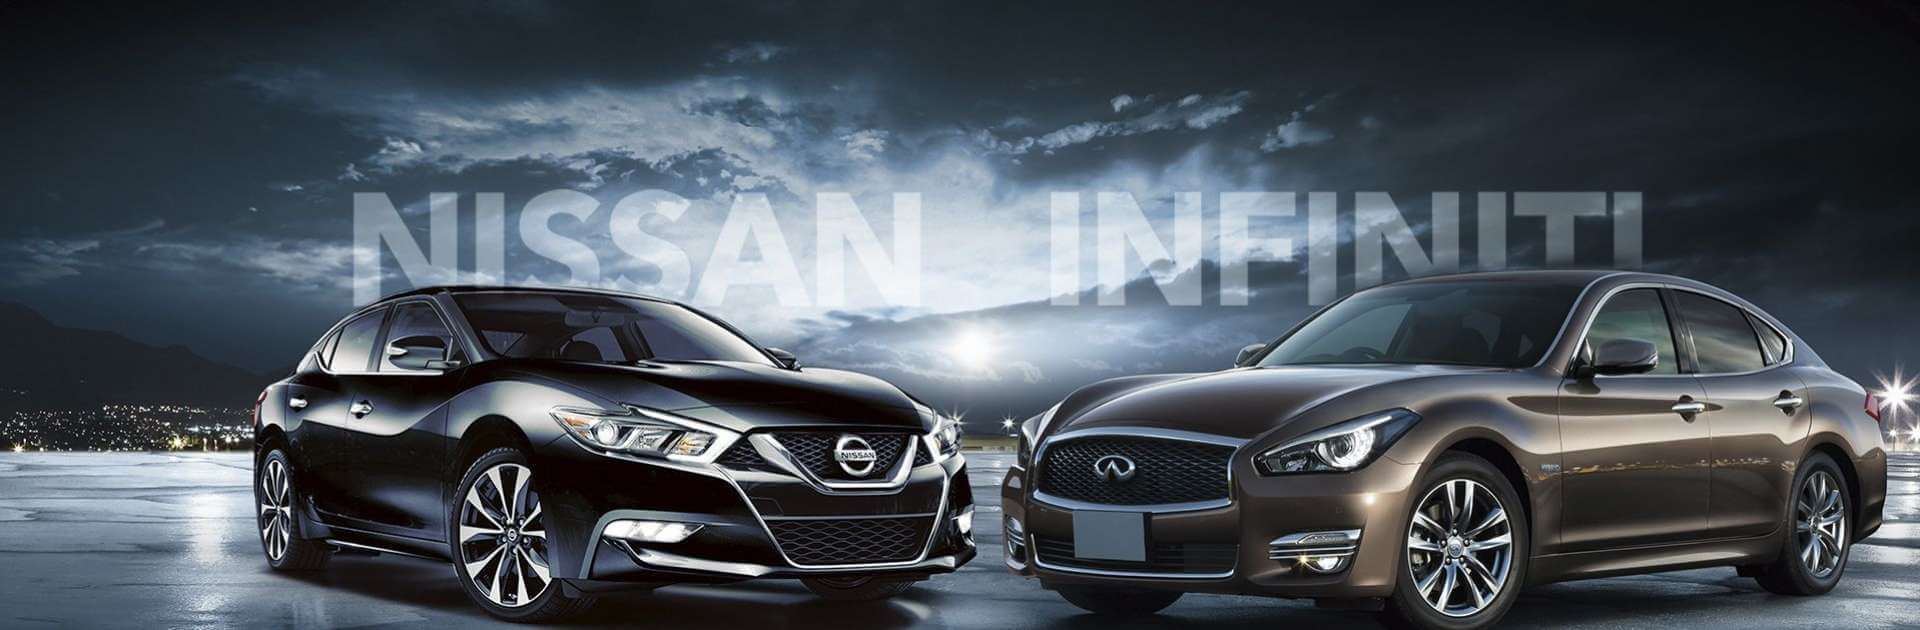 автомобили Nissan и Infinity